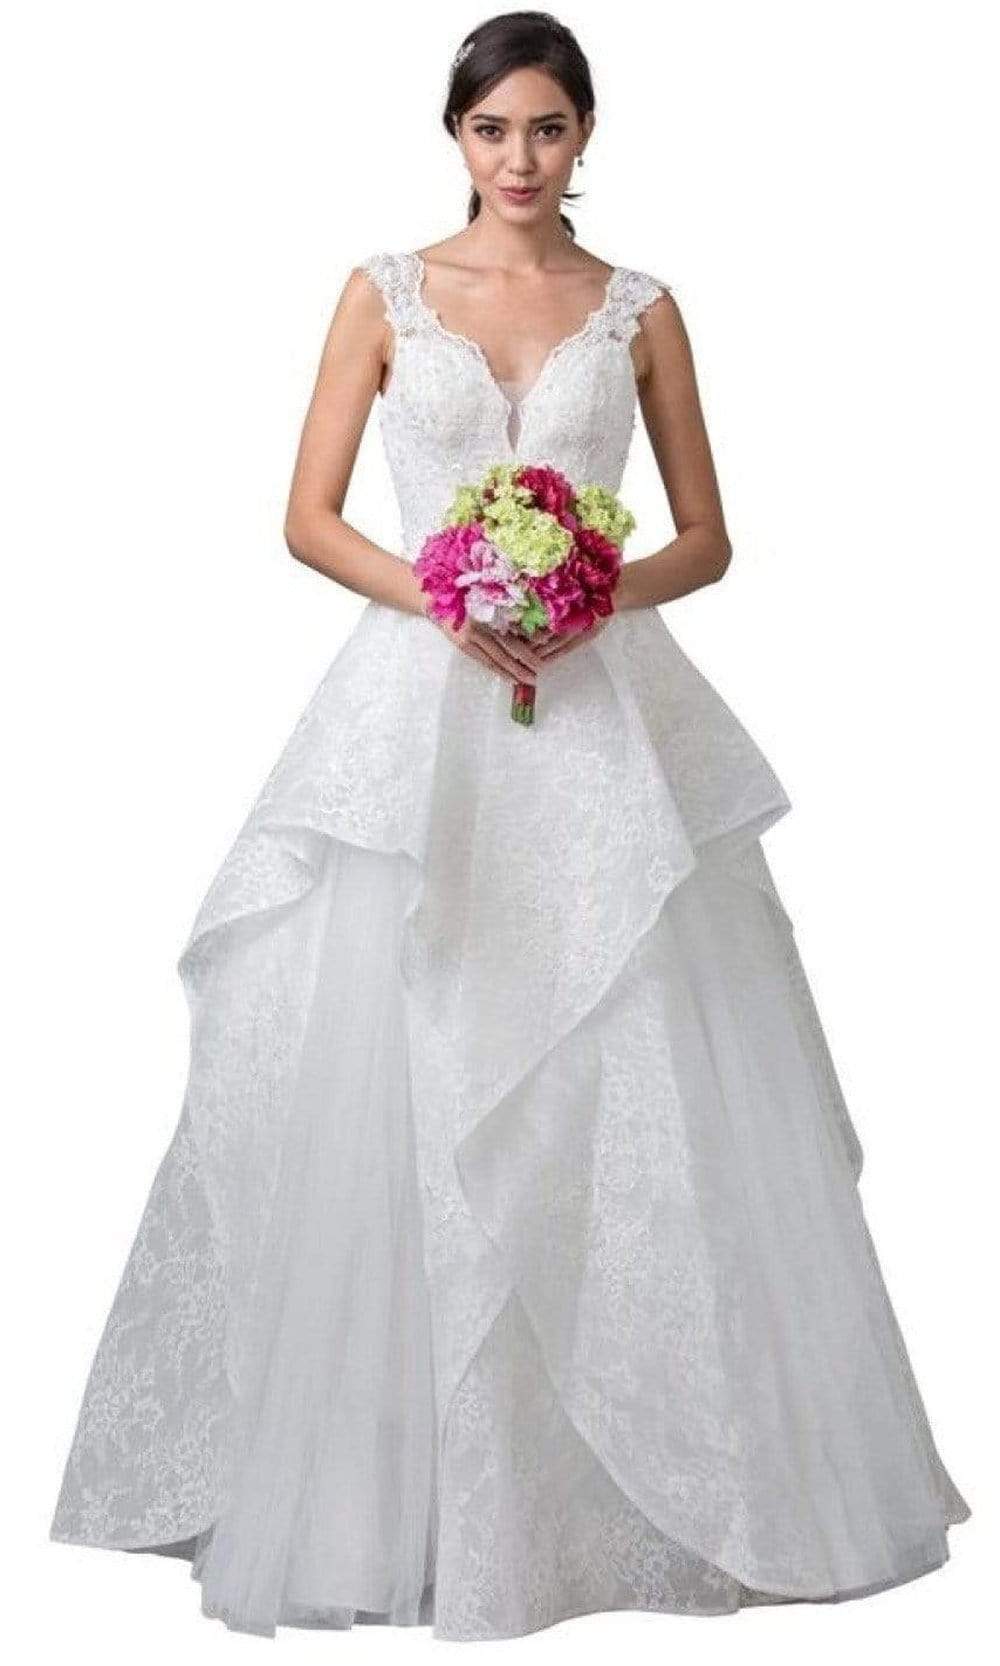 Aspeed Bridal - W2375 Lace Floral Layered Wedding Dress
